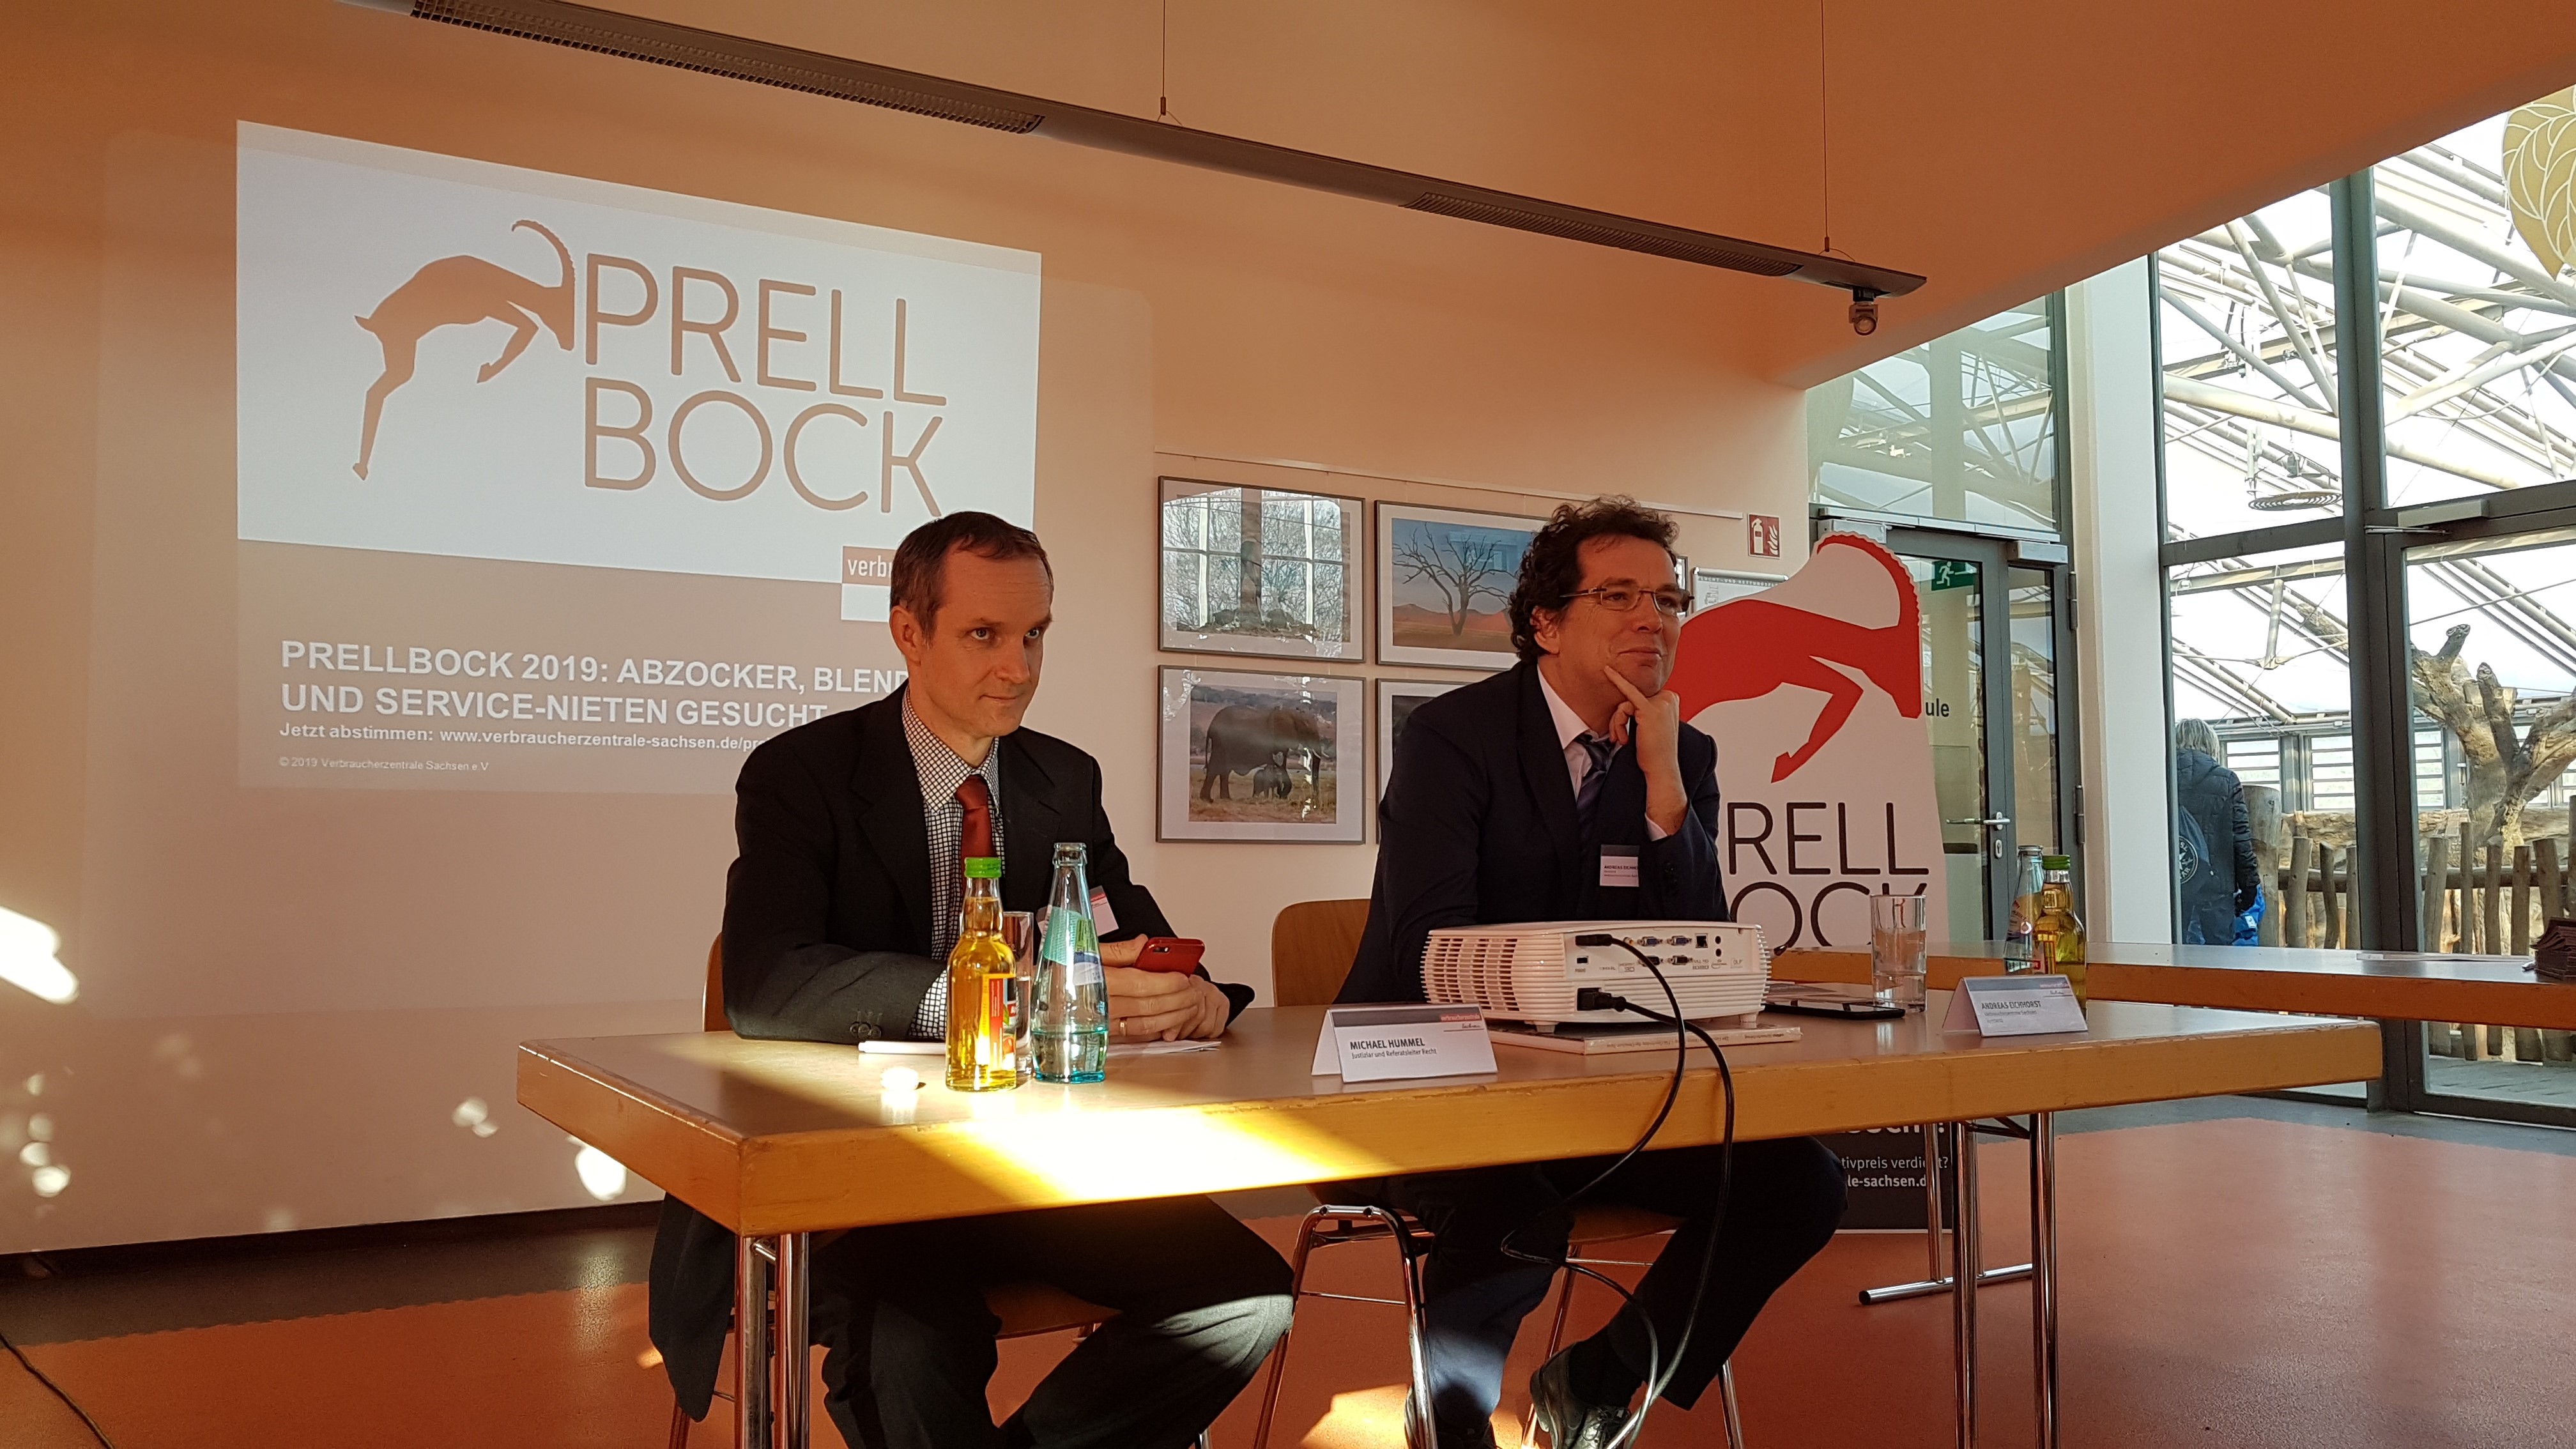 Prellbock 2019: Pressekonferenz